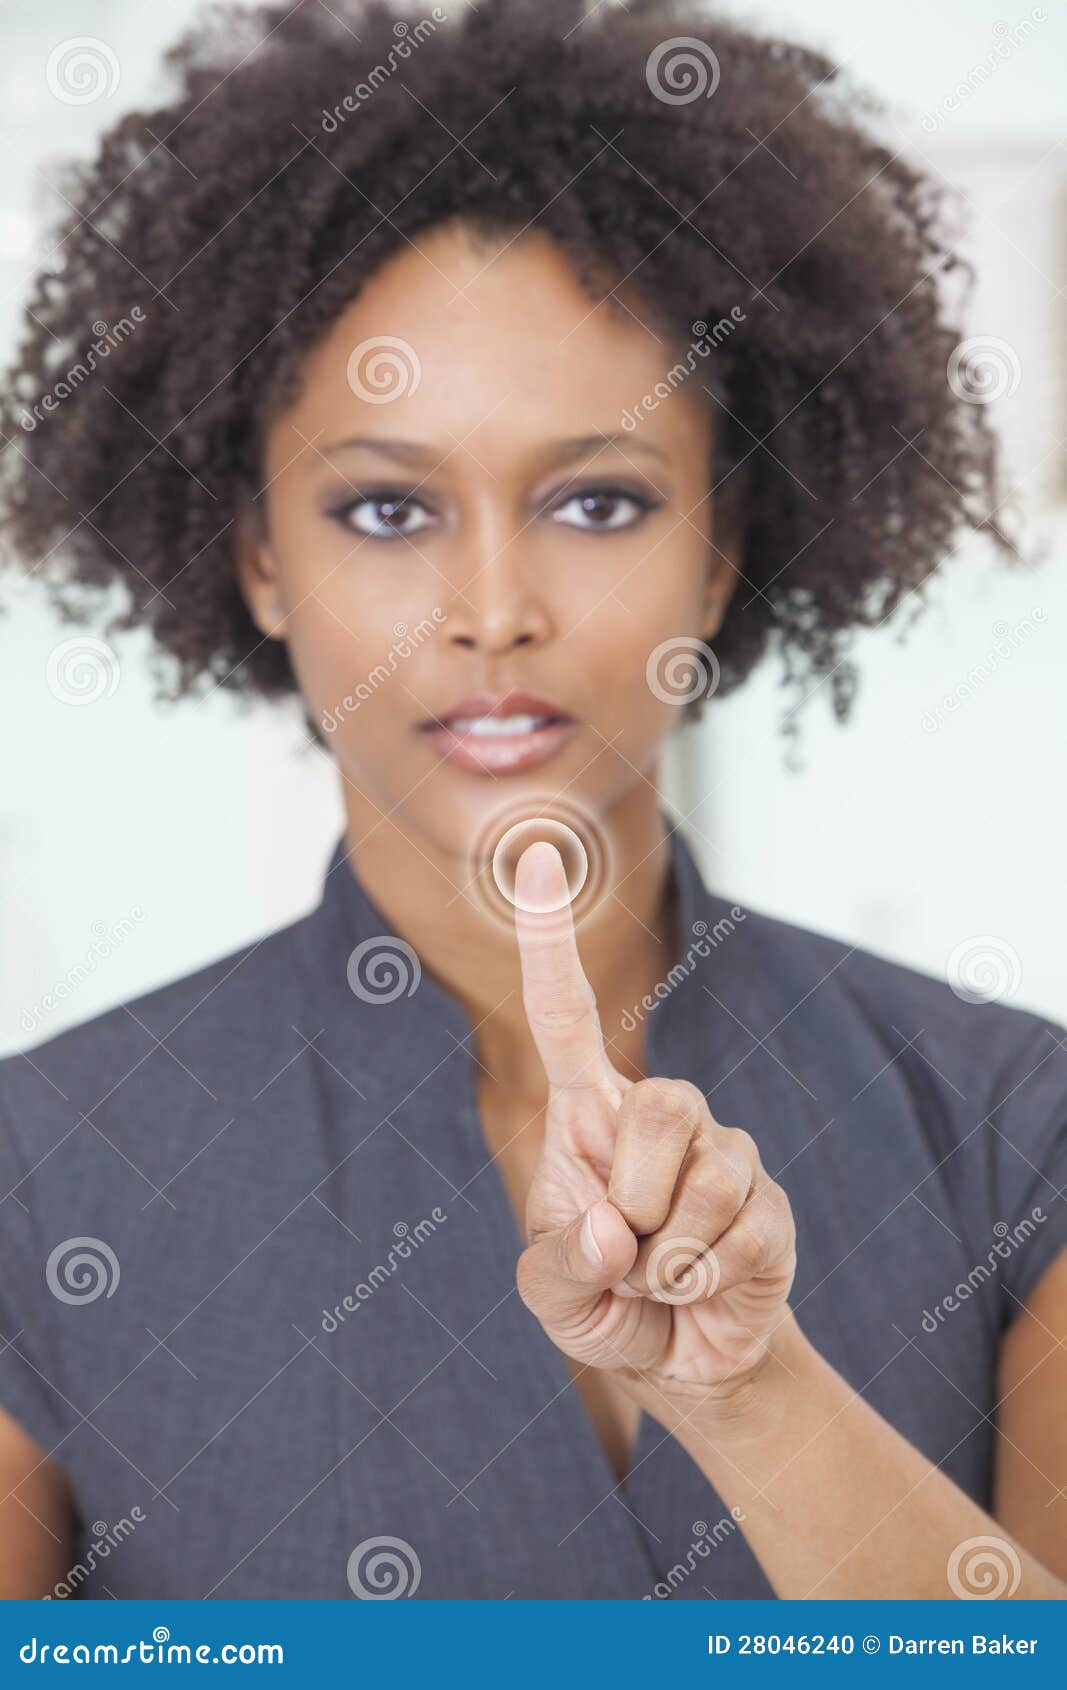 african american woman business touchscreen button